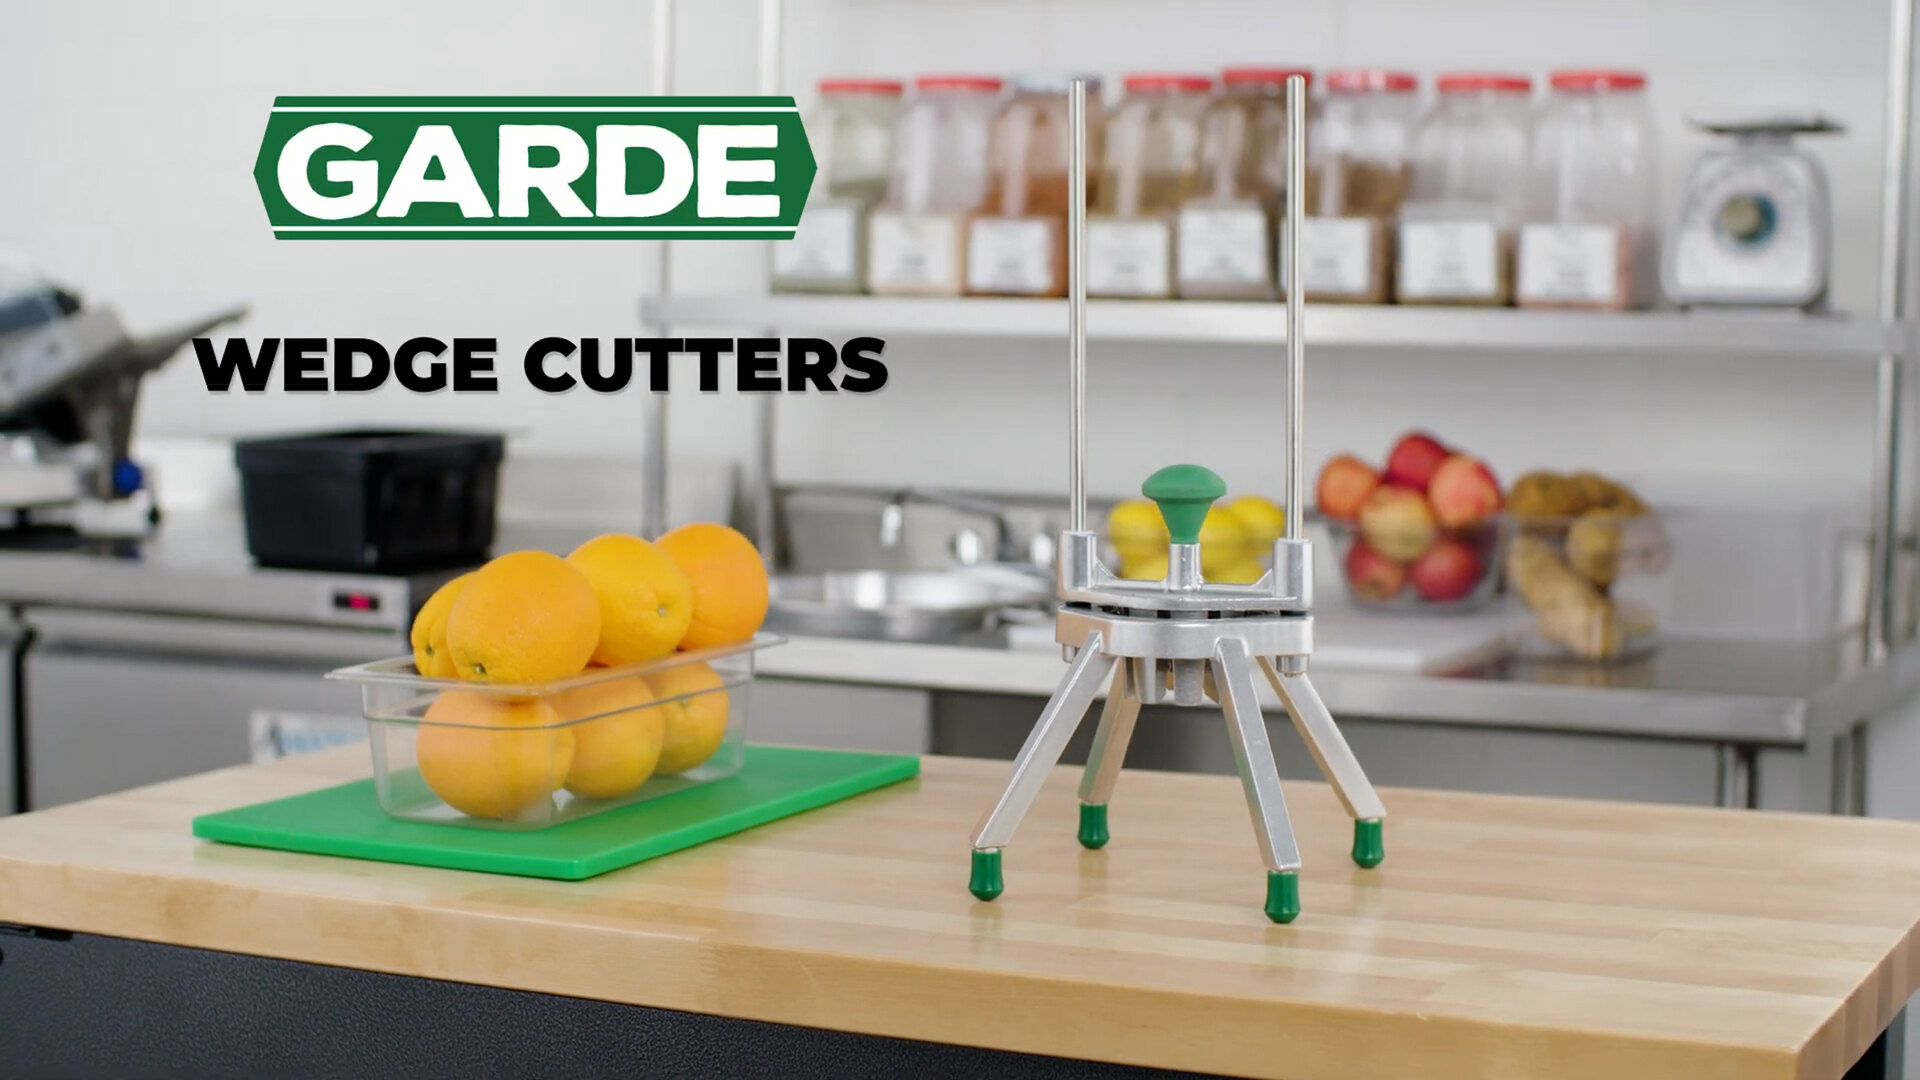 6 Section Commercial Fruit Vegetable Lemon Lime Wedge Cutter Wedger Slicer  NSF for sale online